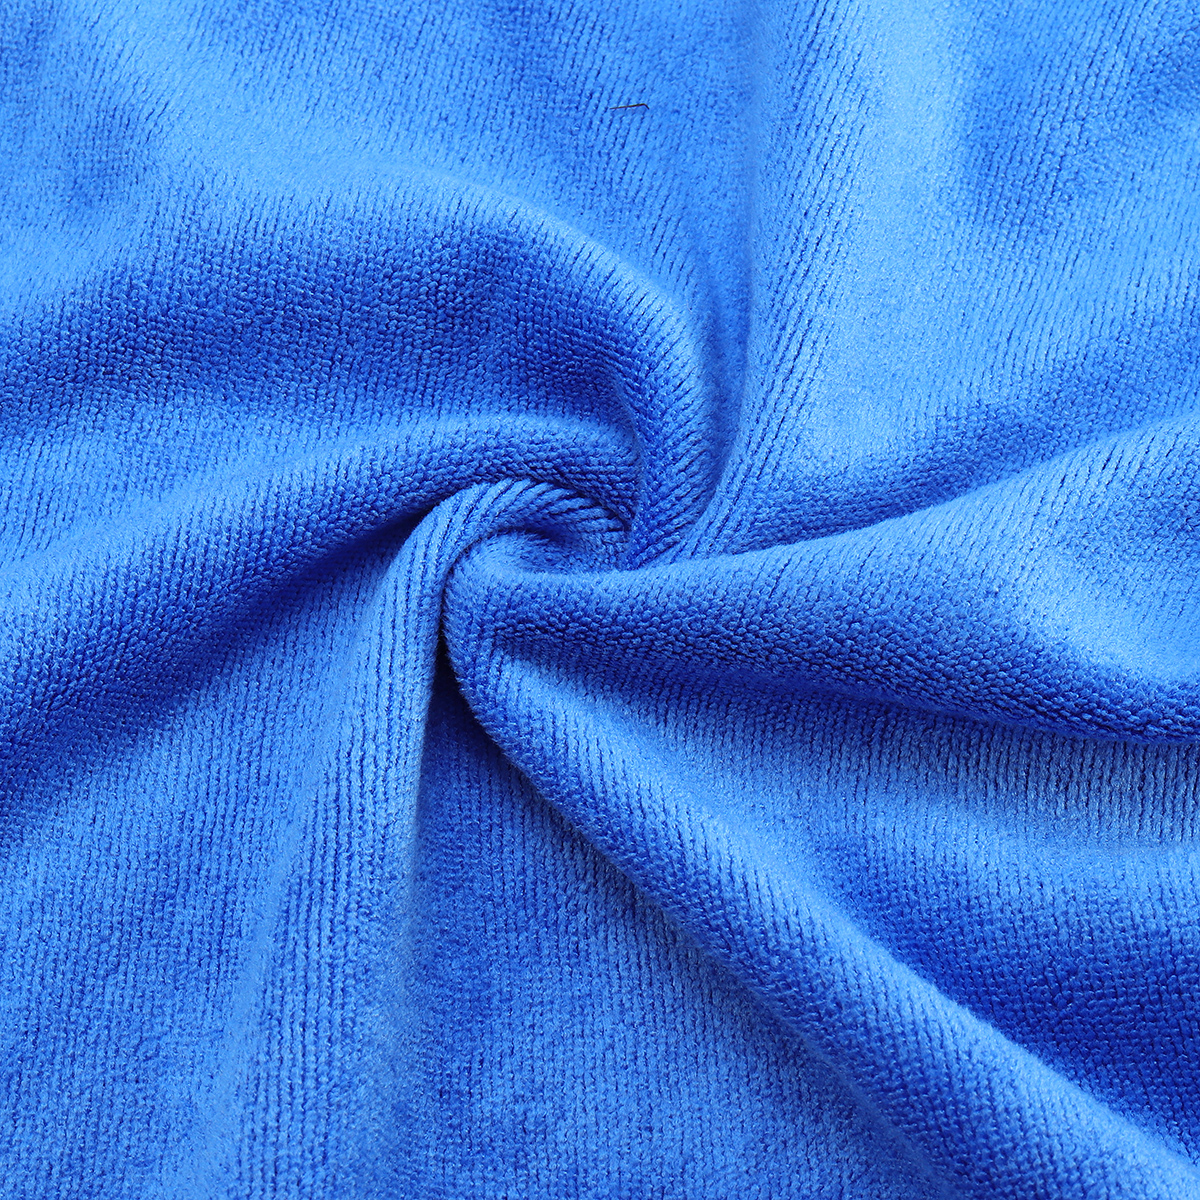 10PCS-Microfiber-Cleaning-Cloths-Washing-Towel-Blue-for-Car-Polishing-Wax-Detailing-Drying-1409803